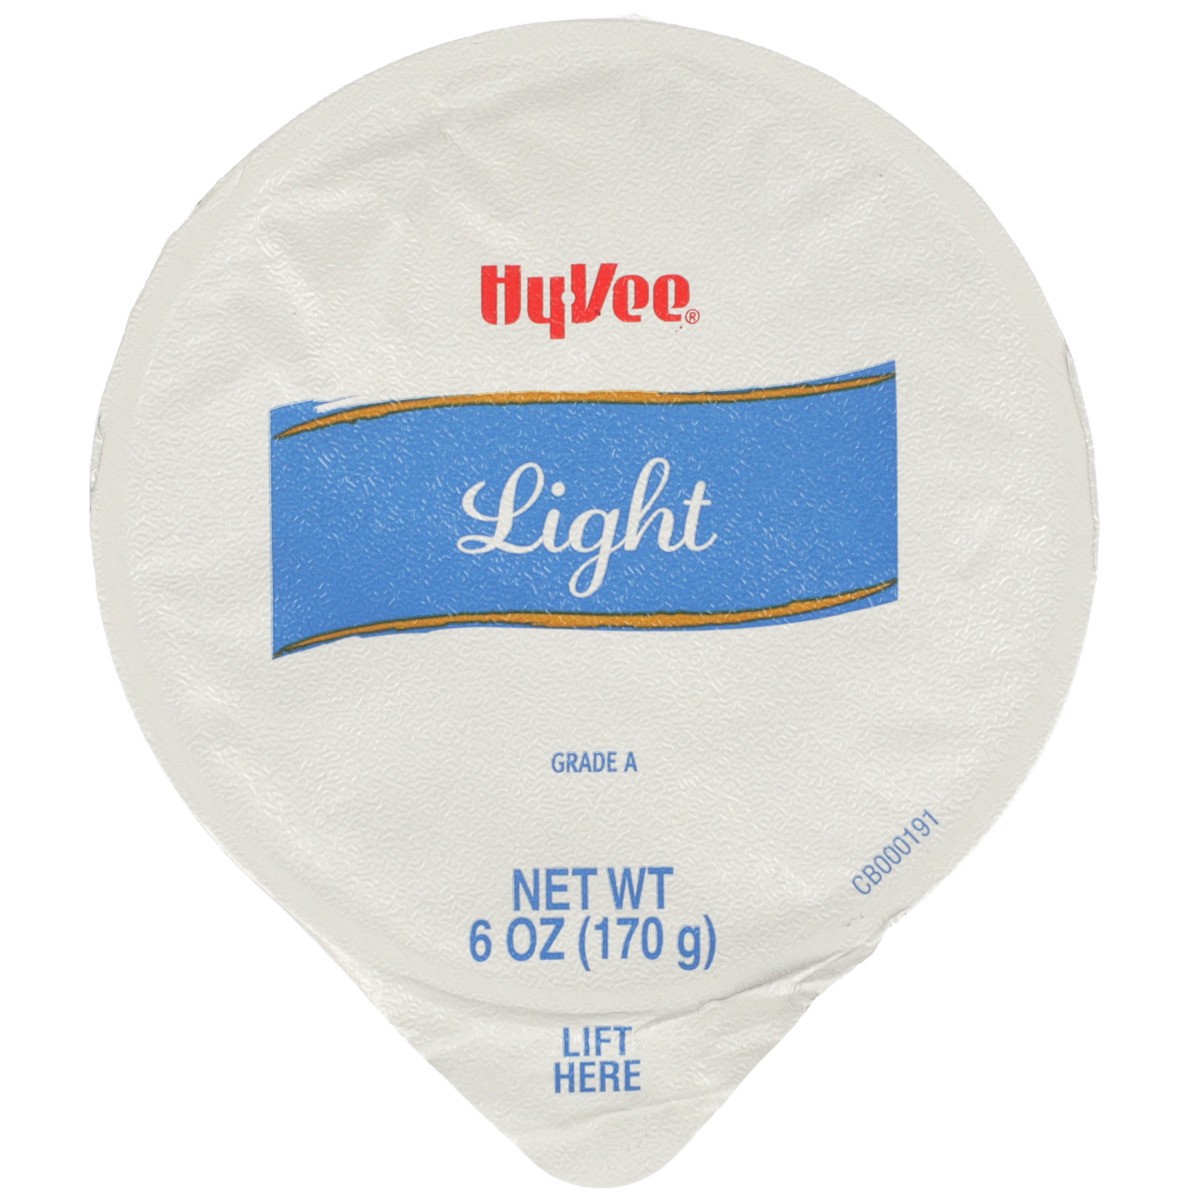 slide 4 of 8, Hy-vee Blueberry Light Nonfat Yogurt, 6 oz